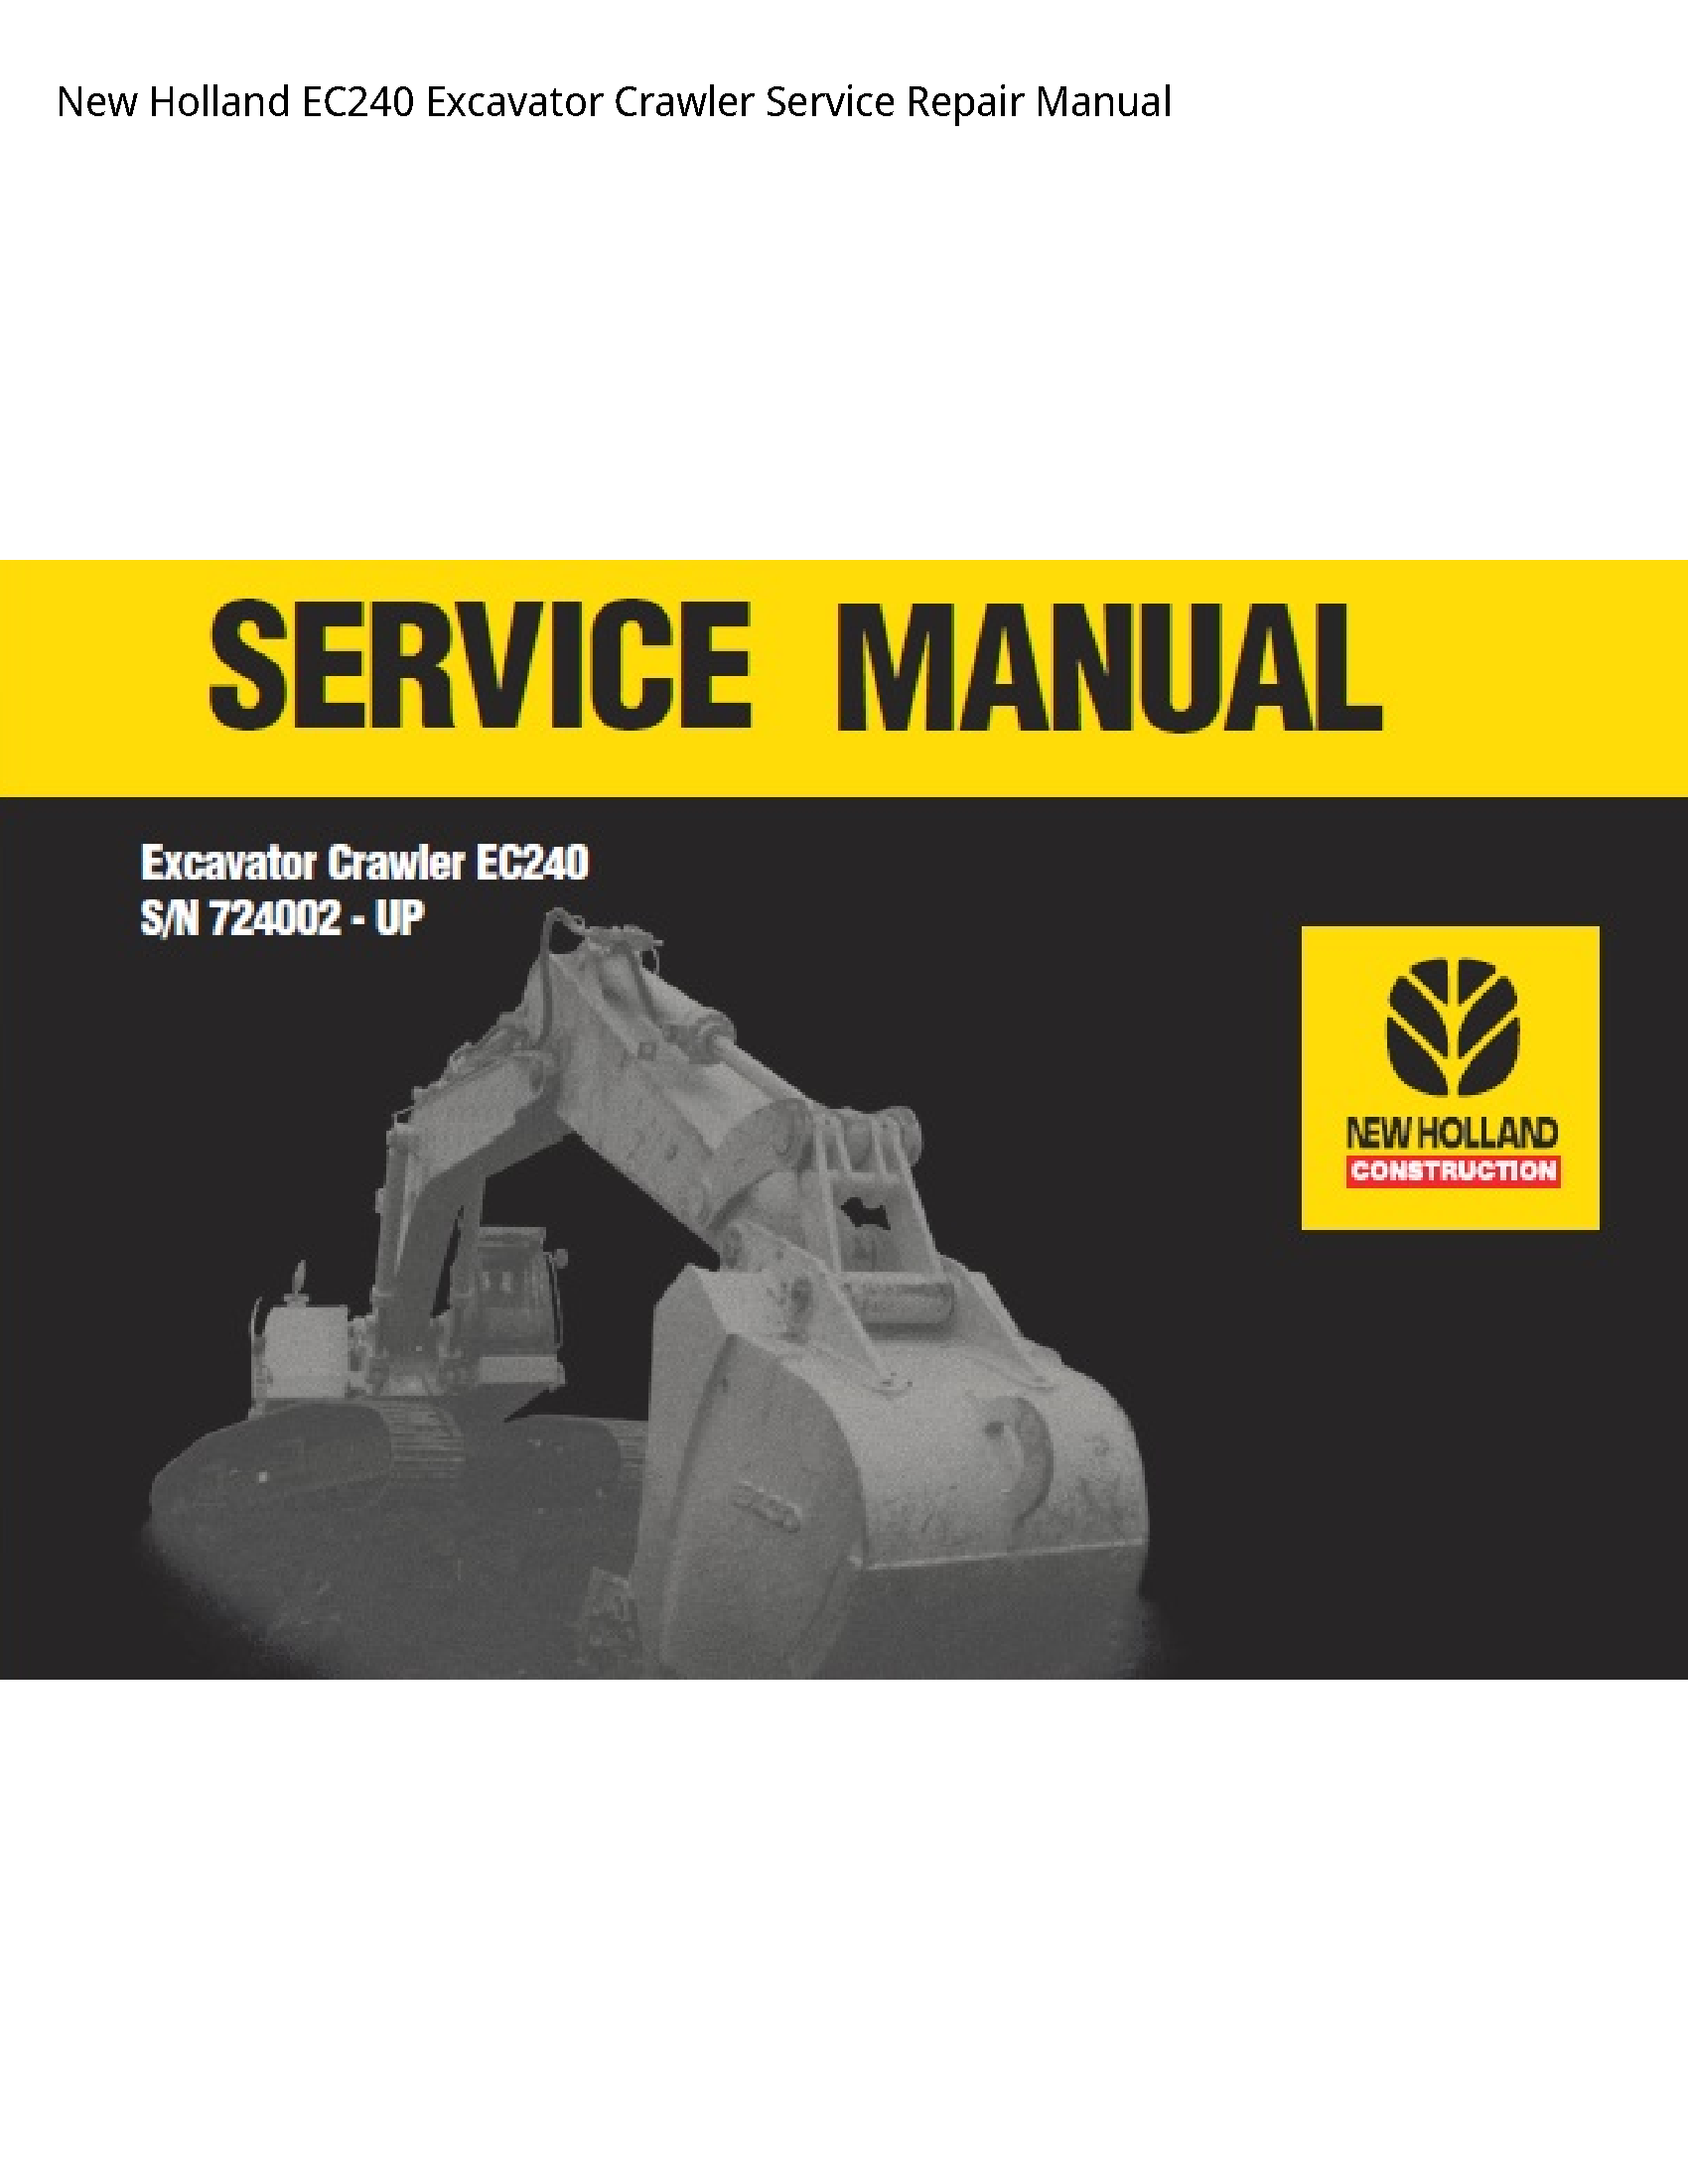 New Holland EC240 Excavator Crawler manual